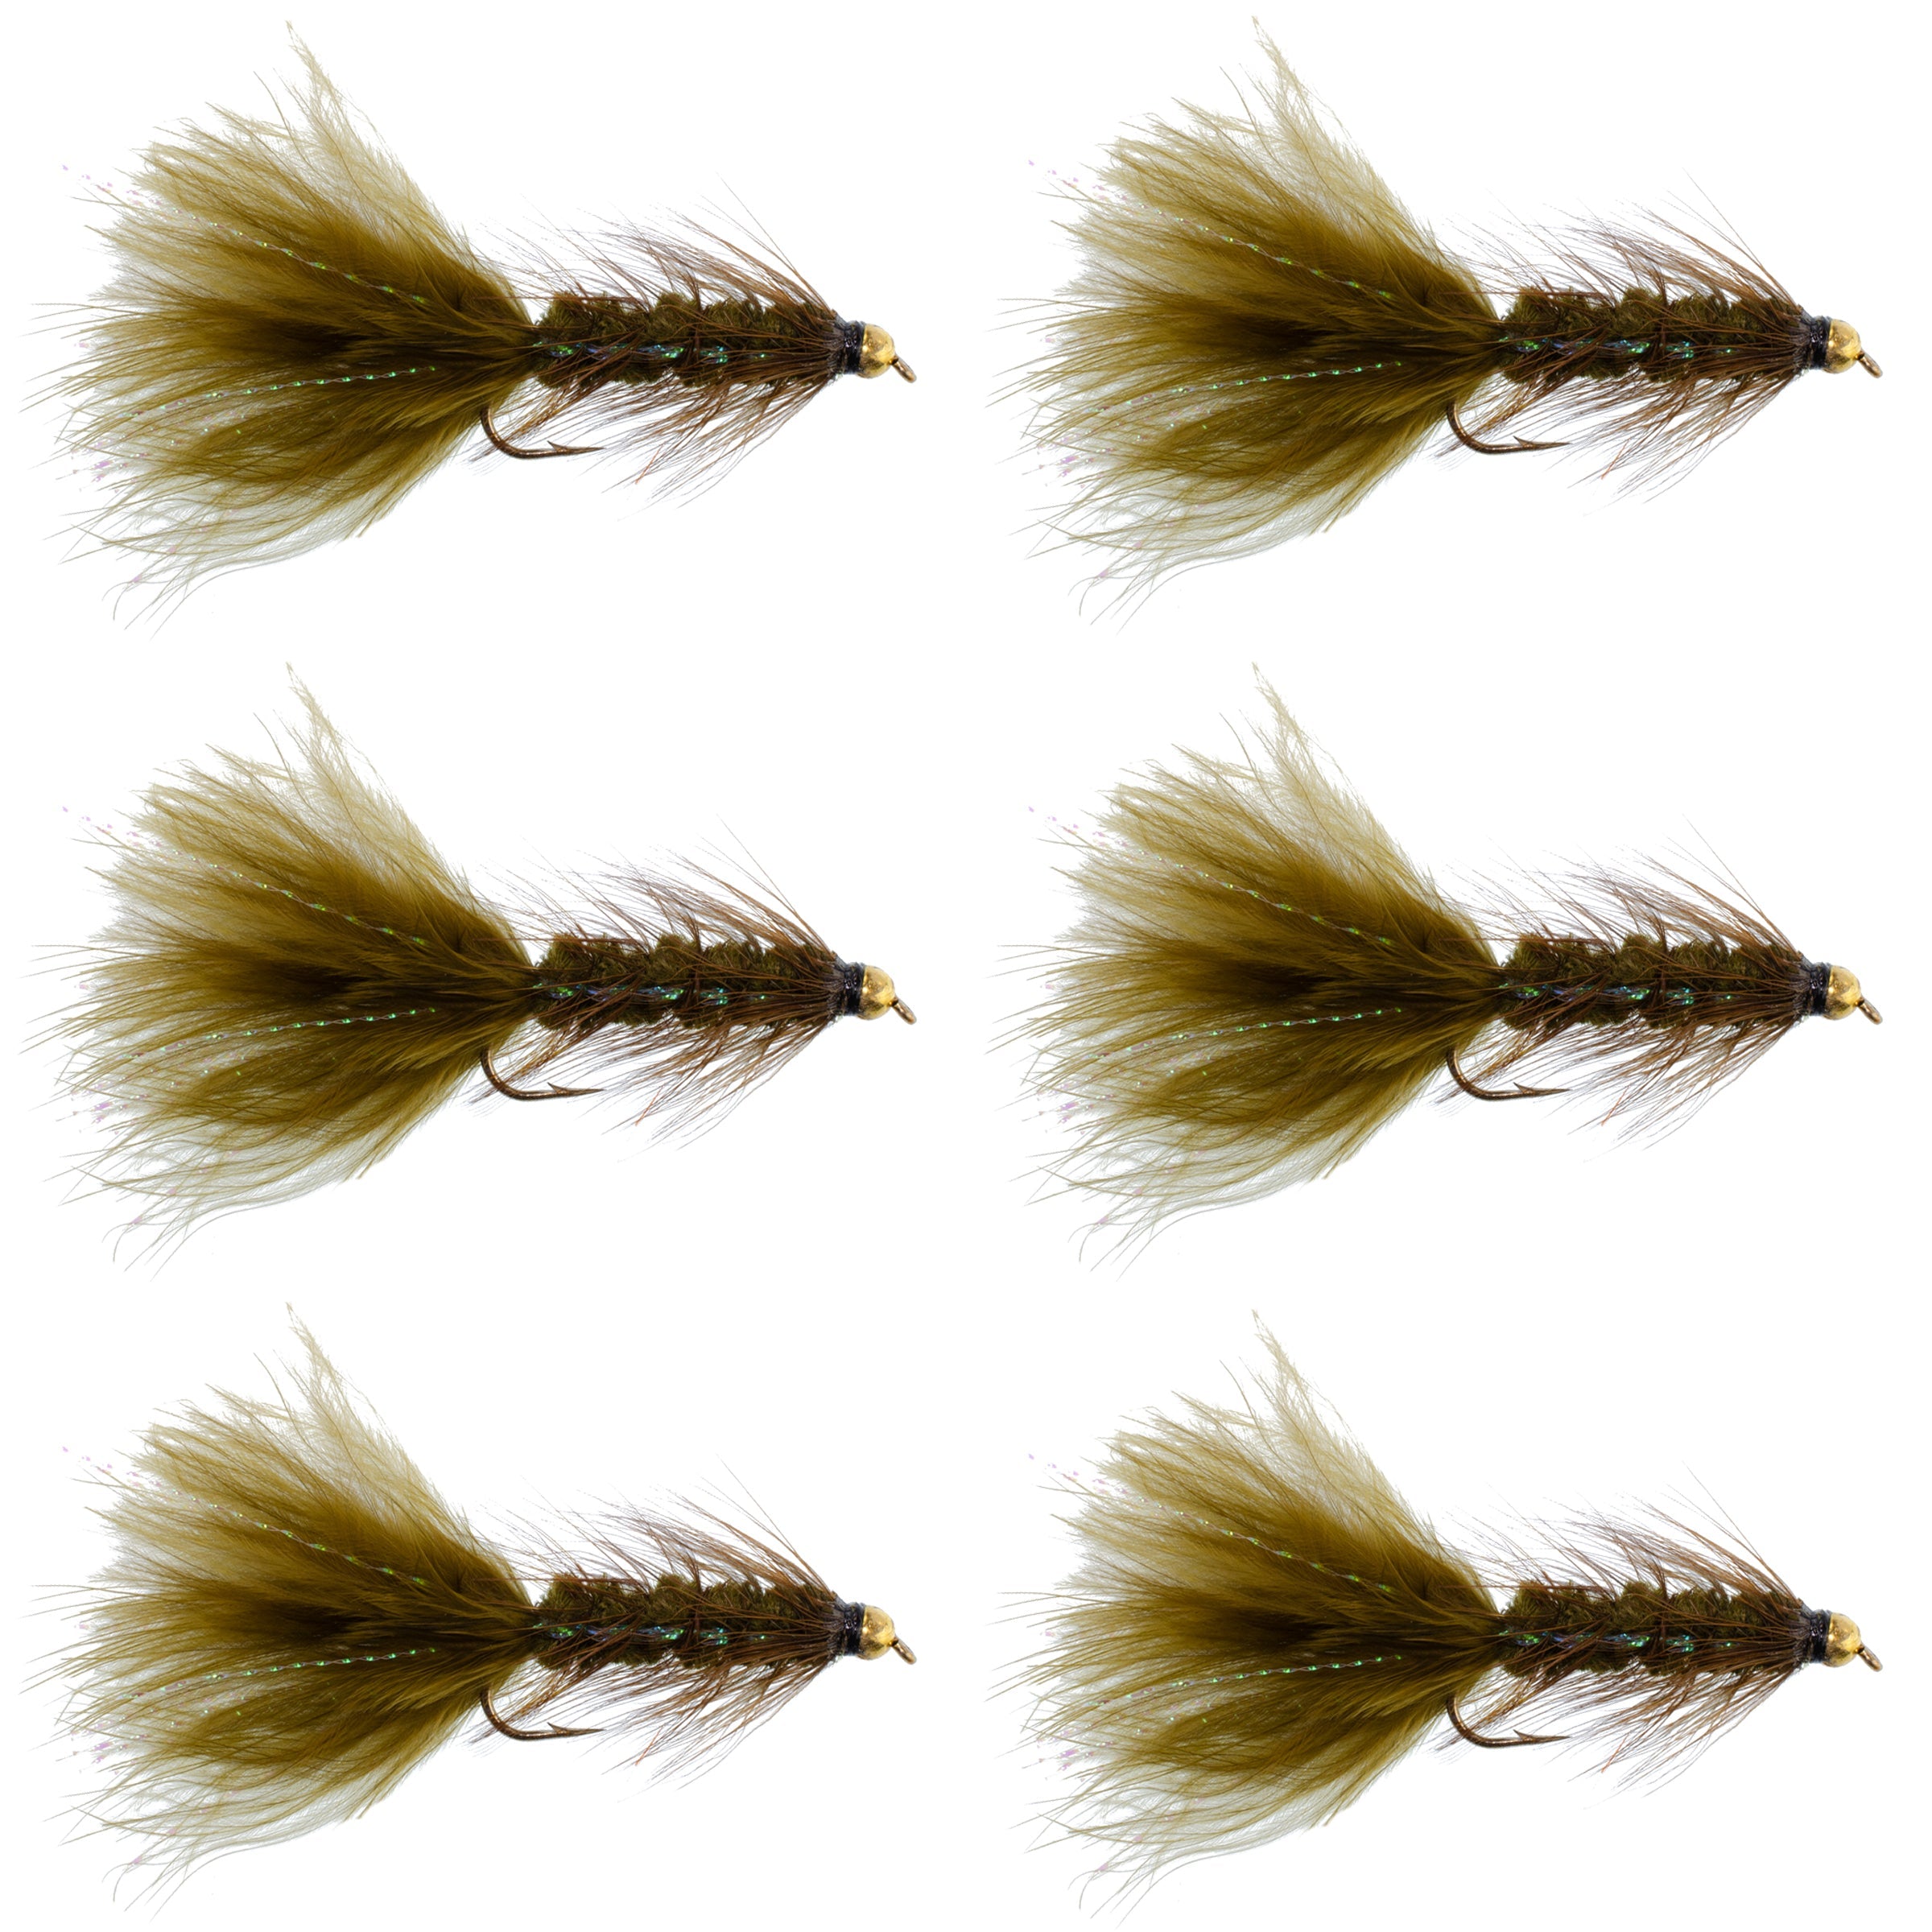 Dark Olive Bead Head Crystal Woolly Bugger Classic Streamer Flies - Set of 6 Trout Fly Fishing Flies - Hook Size 4